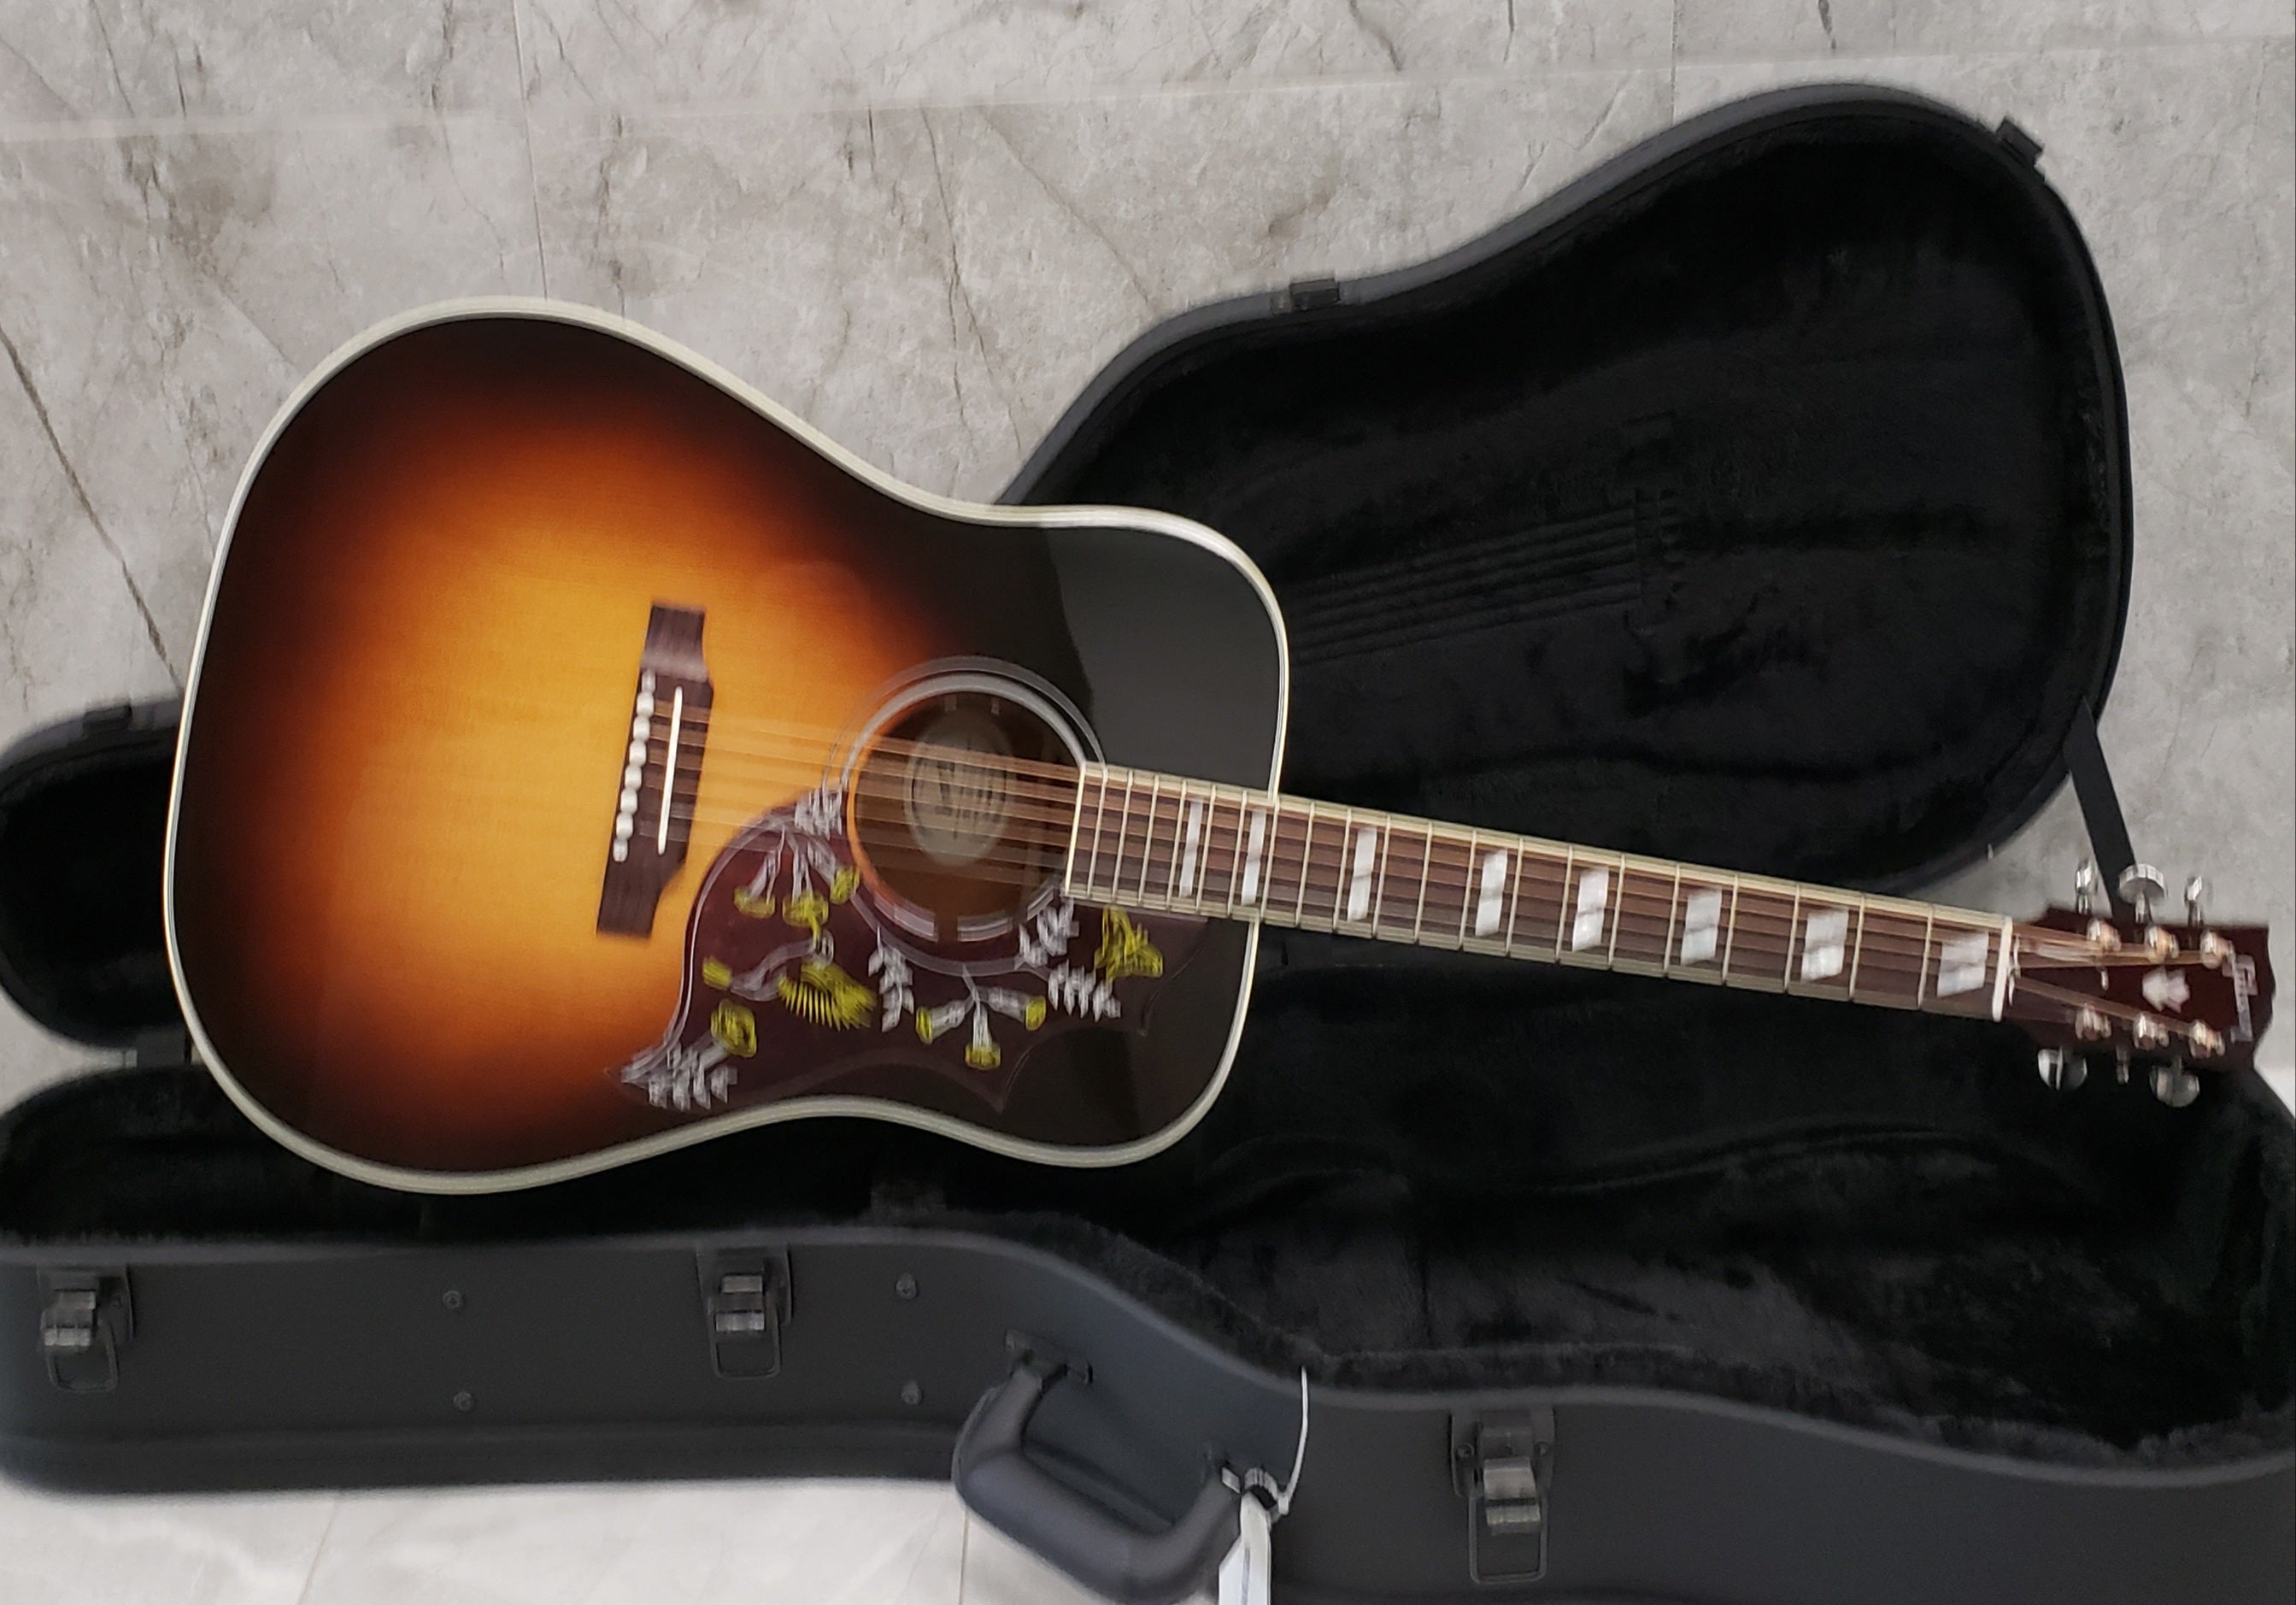 Gibson Hummingbird Standard - Vintage Sunburst ACHBSVSNH 